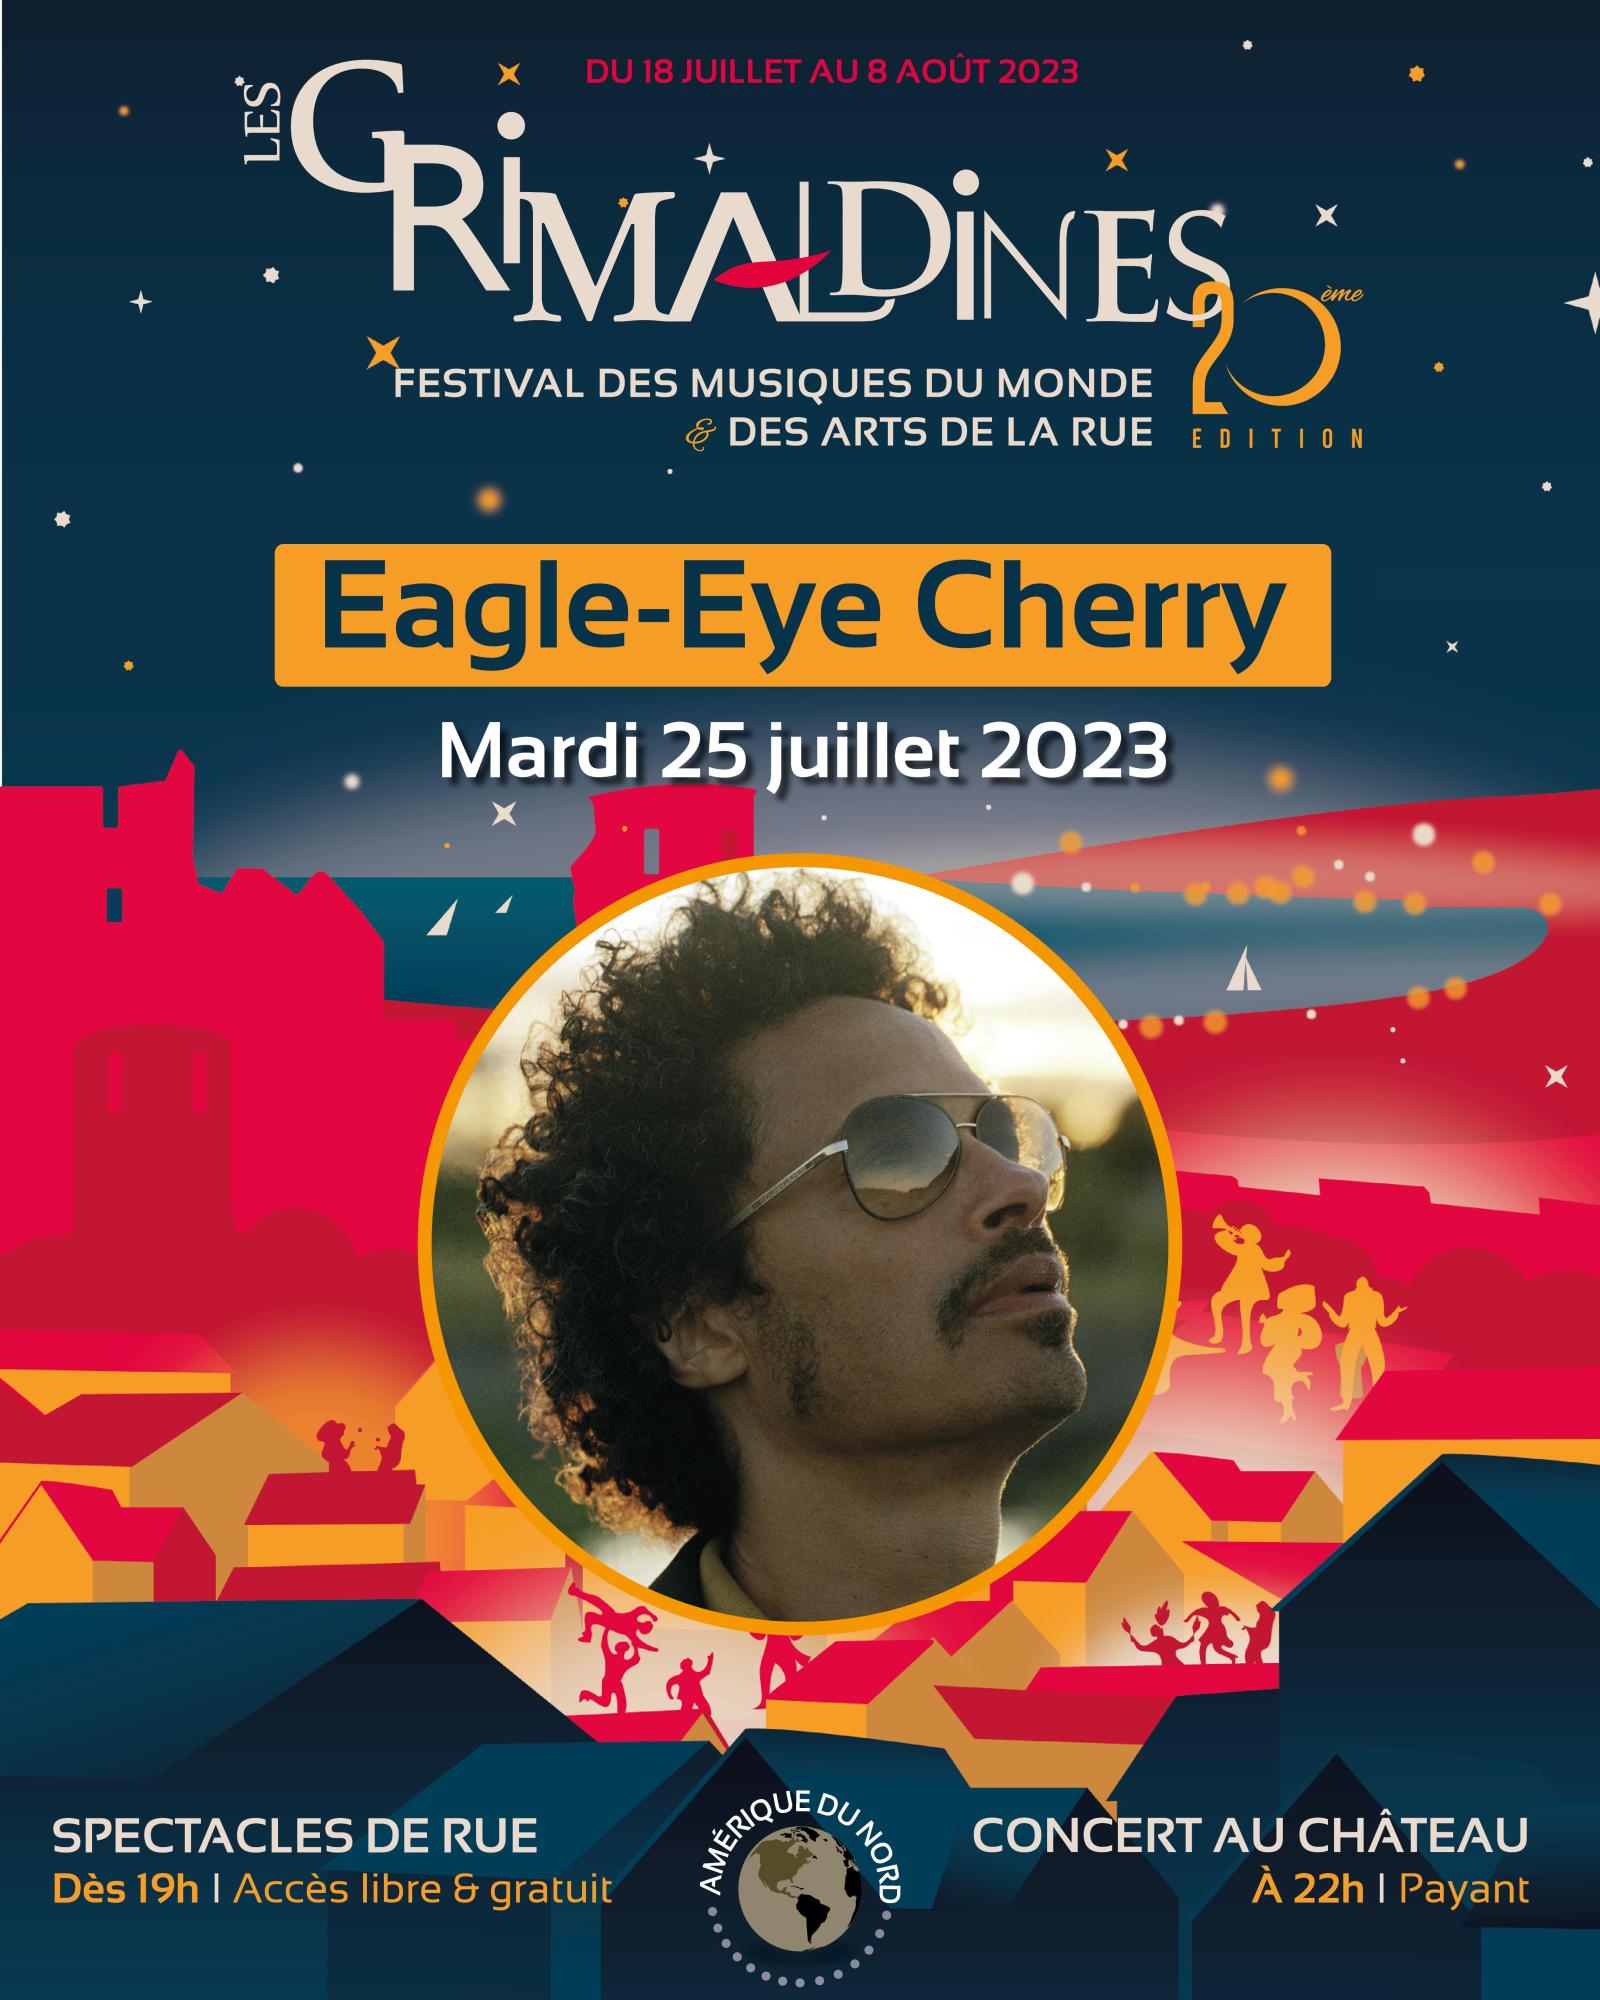 Mardi 25 juillet 2023 - Les Grimaldines avec Eagle-Eye Cherry